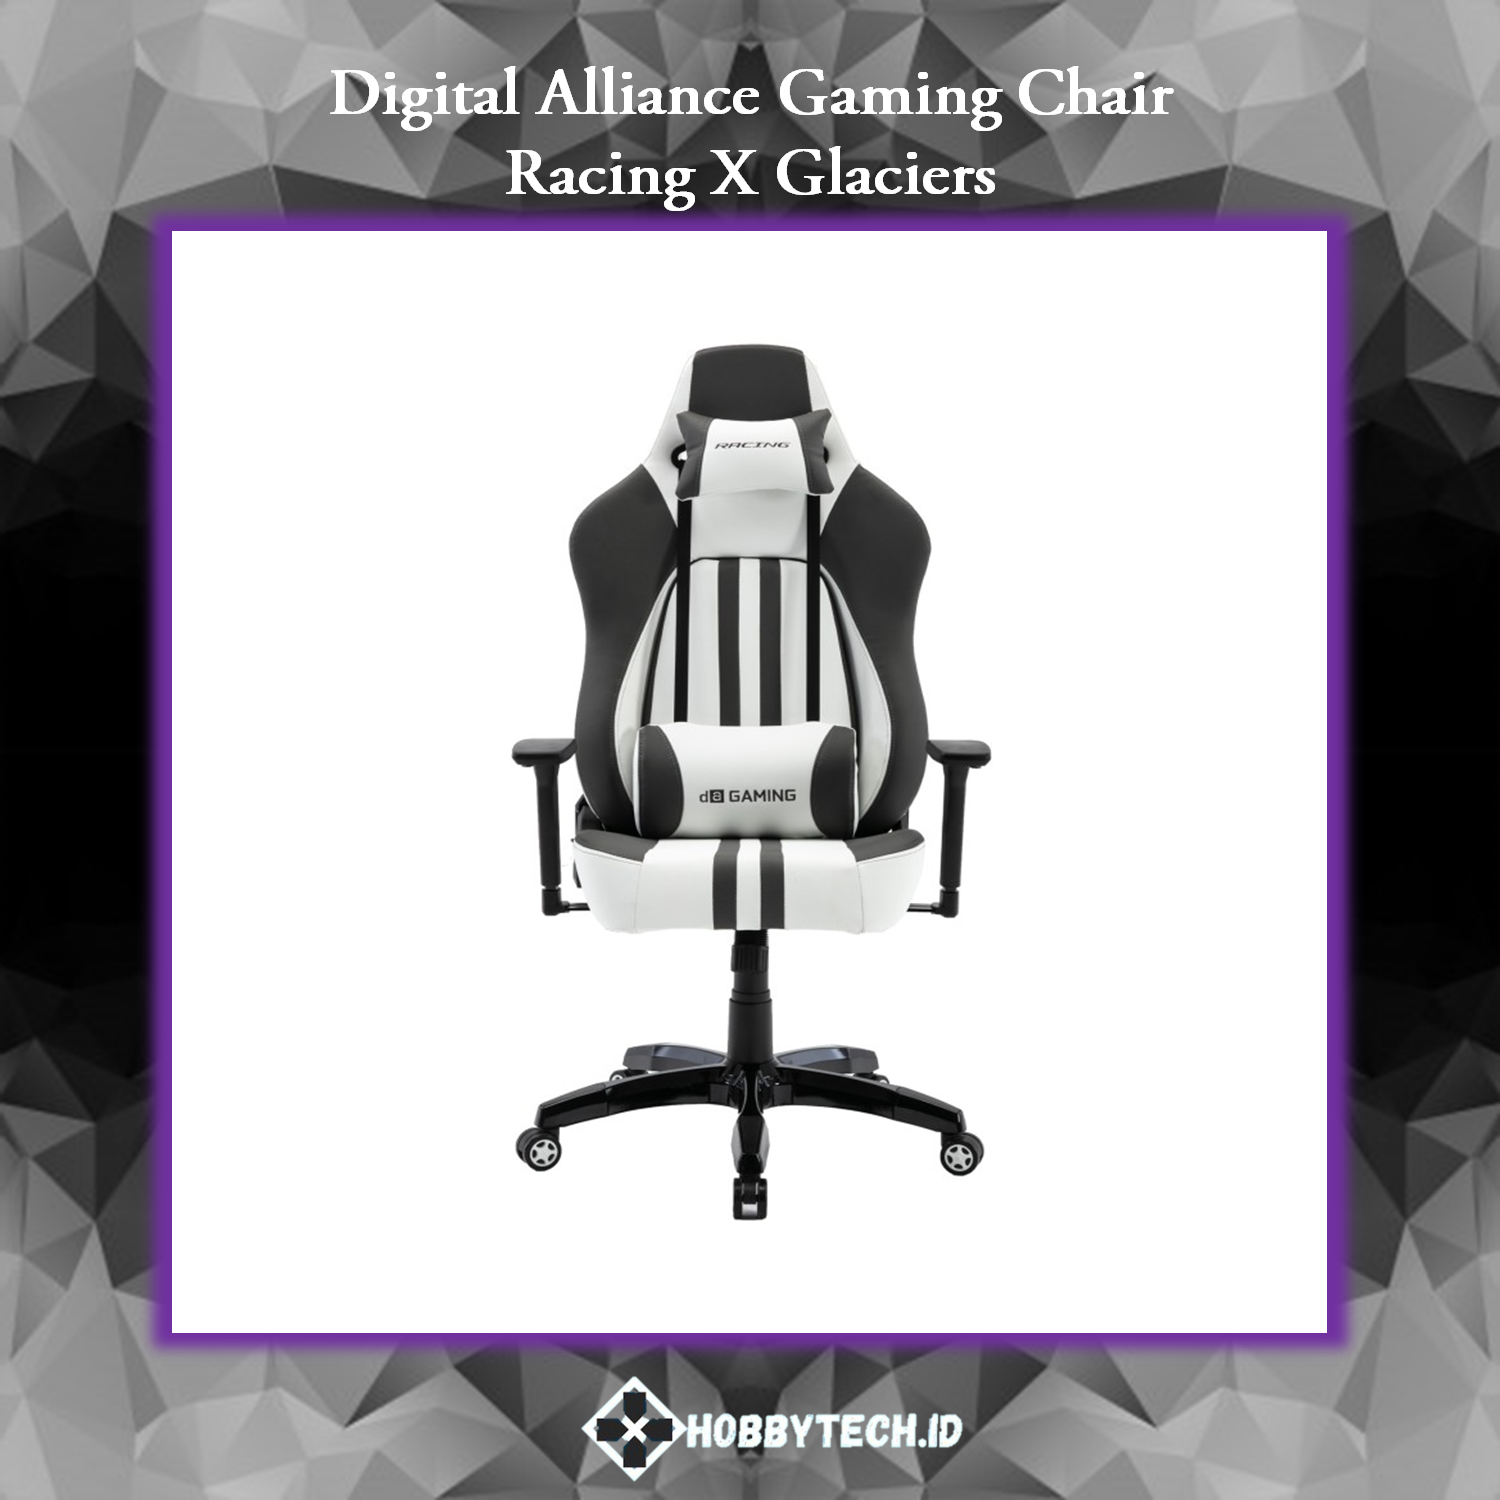 Digital Alliance Gaming Chair Racing X Glaciers